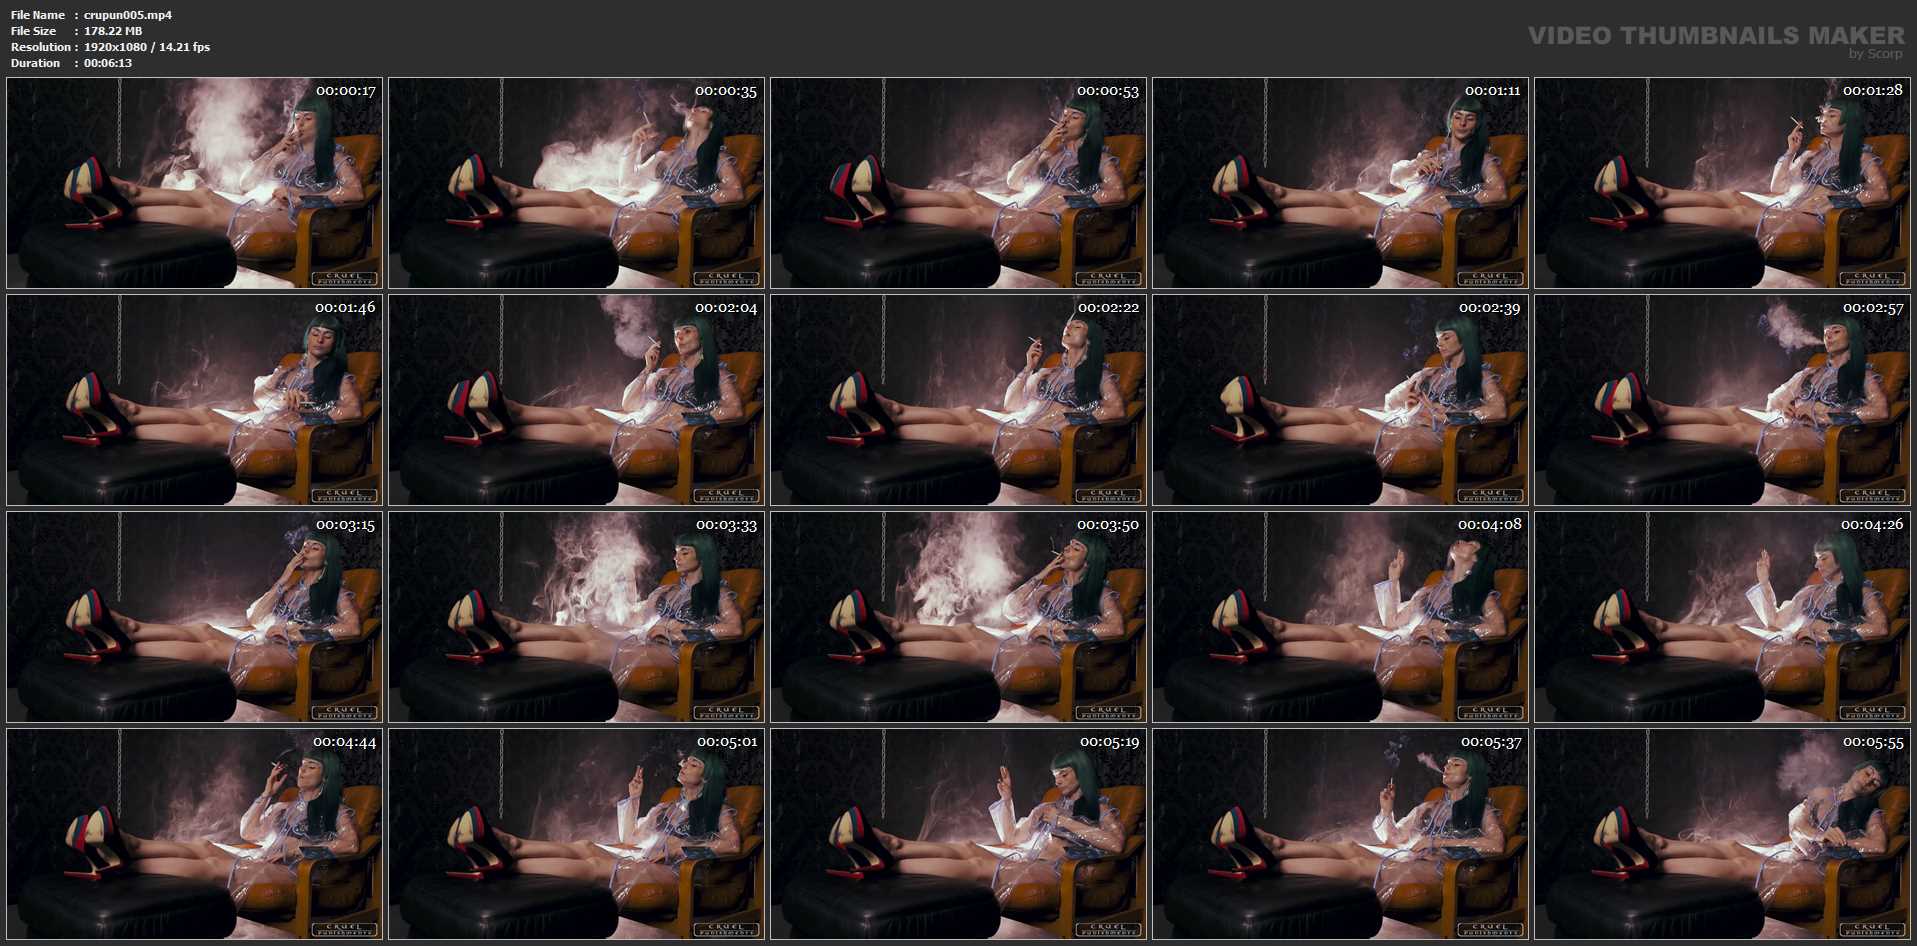 Mistress Suzy - GOOD CIGARETTE - CRUEL PUNISHMENTS - SEVERE FEMDOM - FULL HD/1080p/MP4